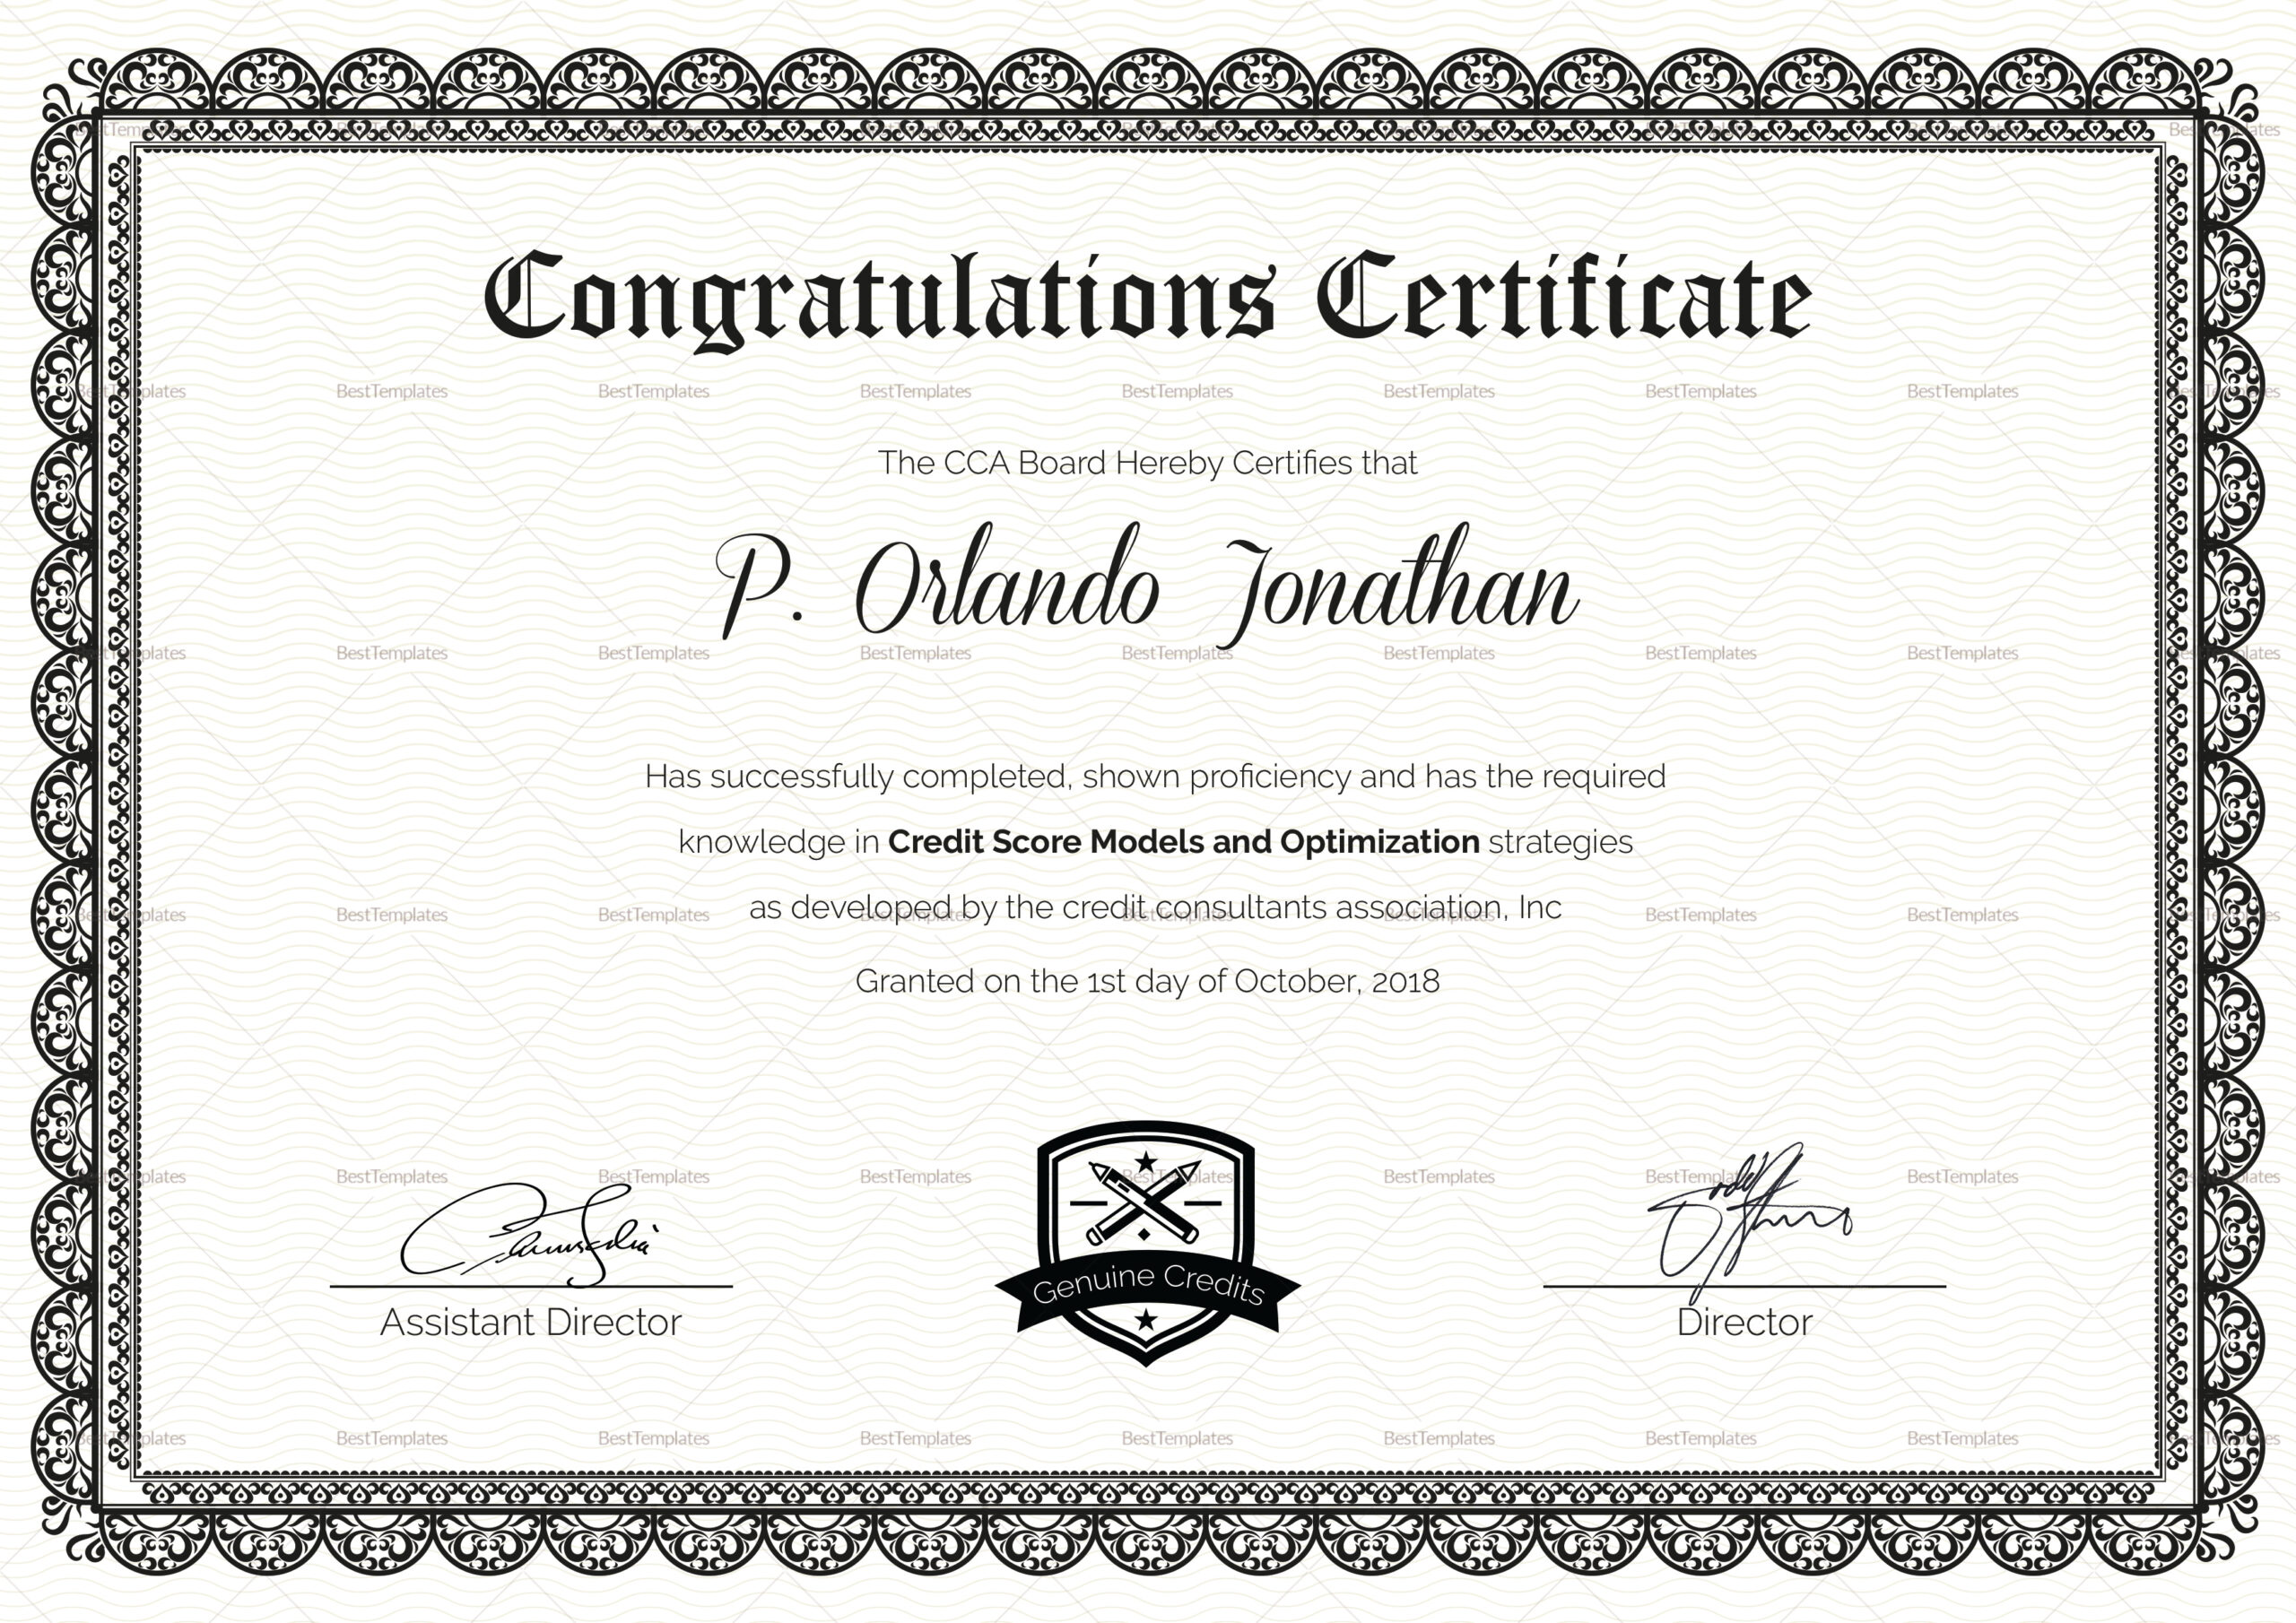 Congratulations Certificate Design Template in PSD, Word Throughout Congratulations Certificate Word Template